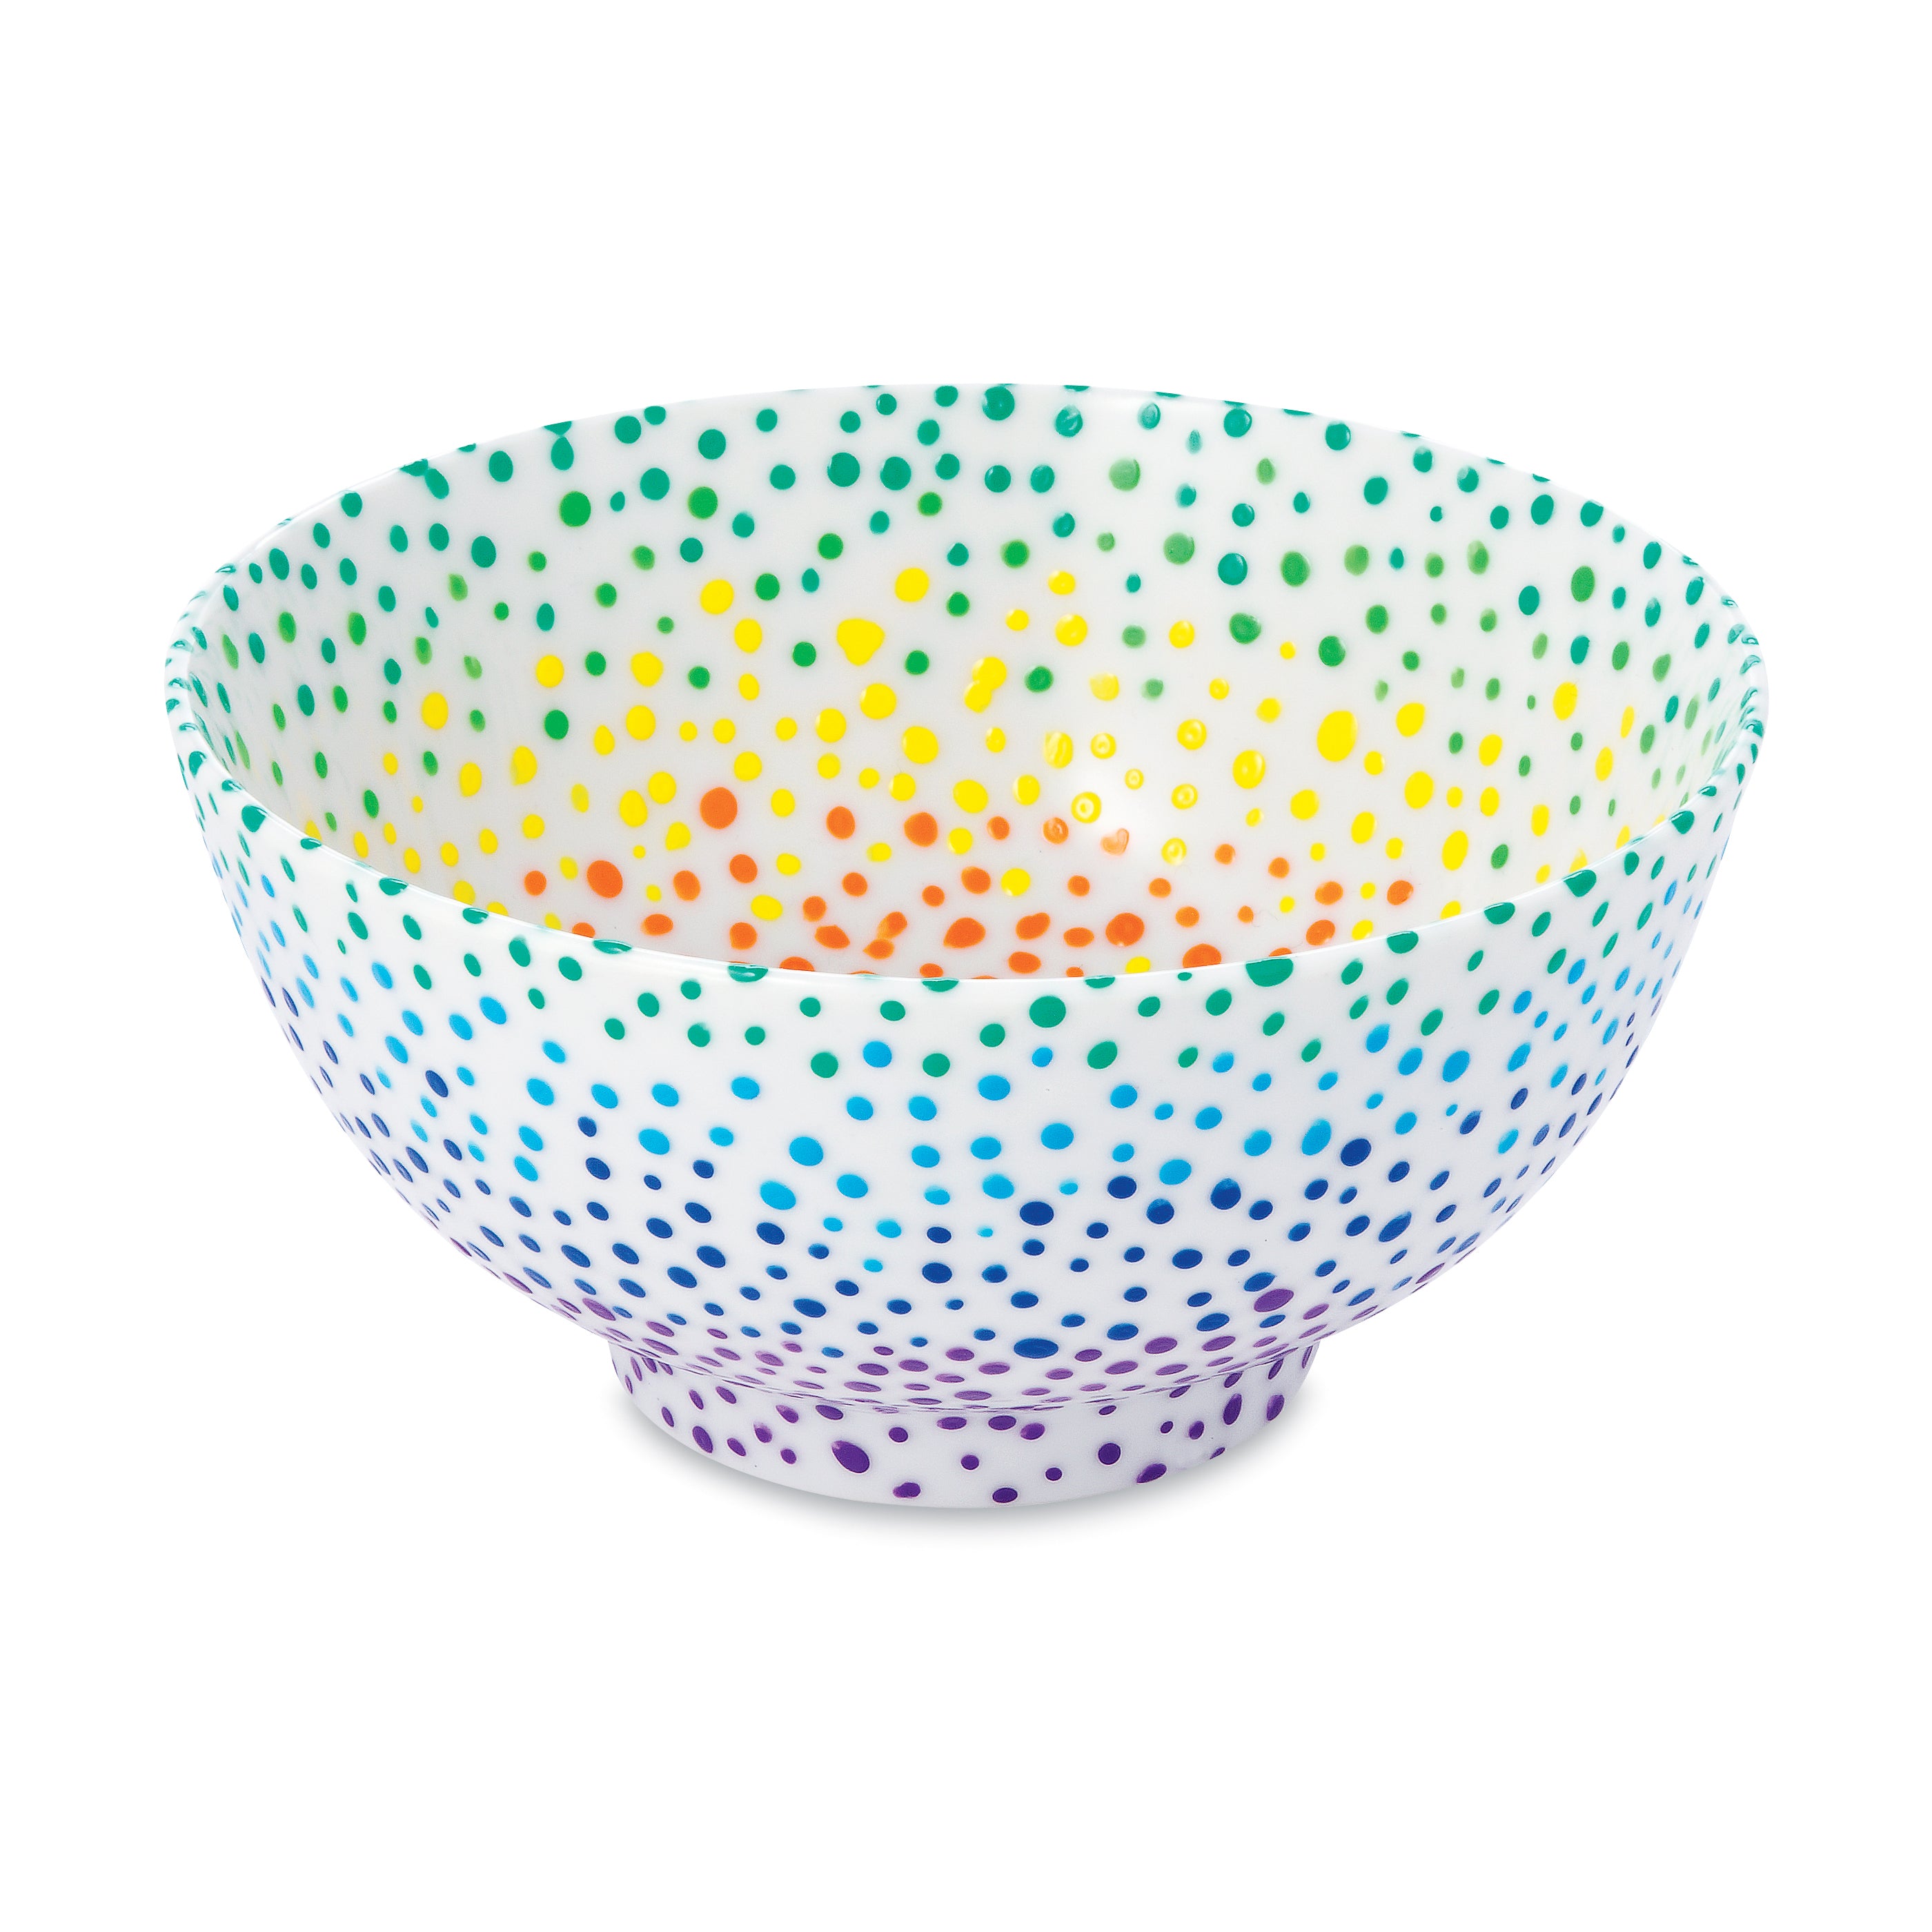 Mindware Paint Your Own Porcelain: Bowls Game